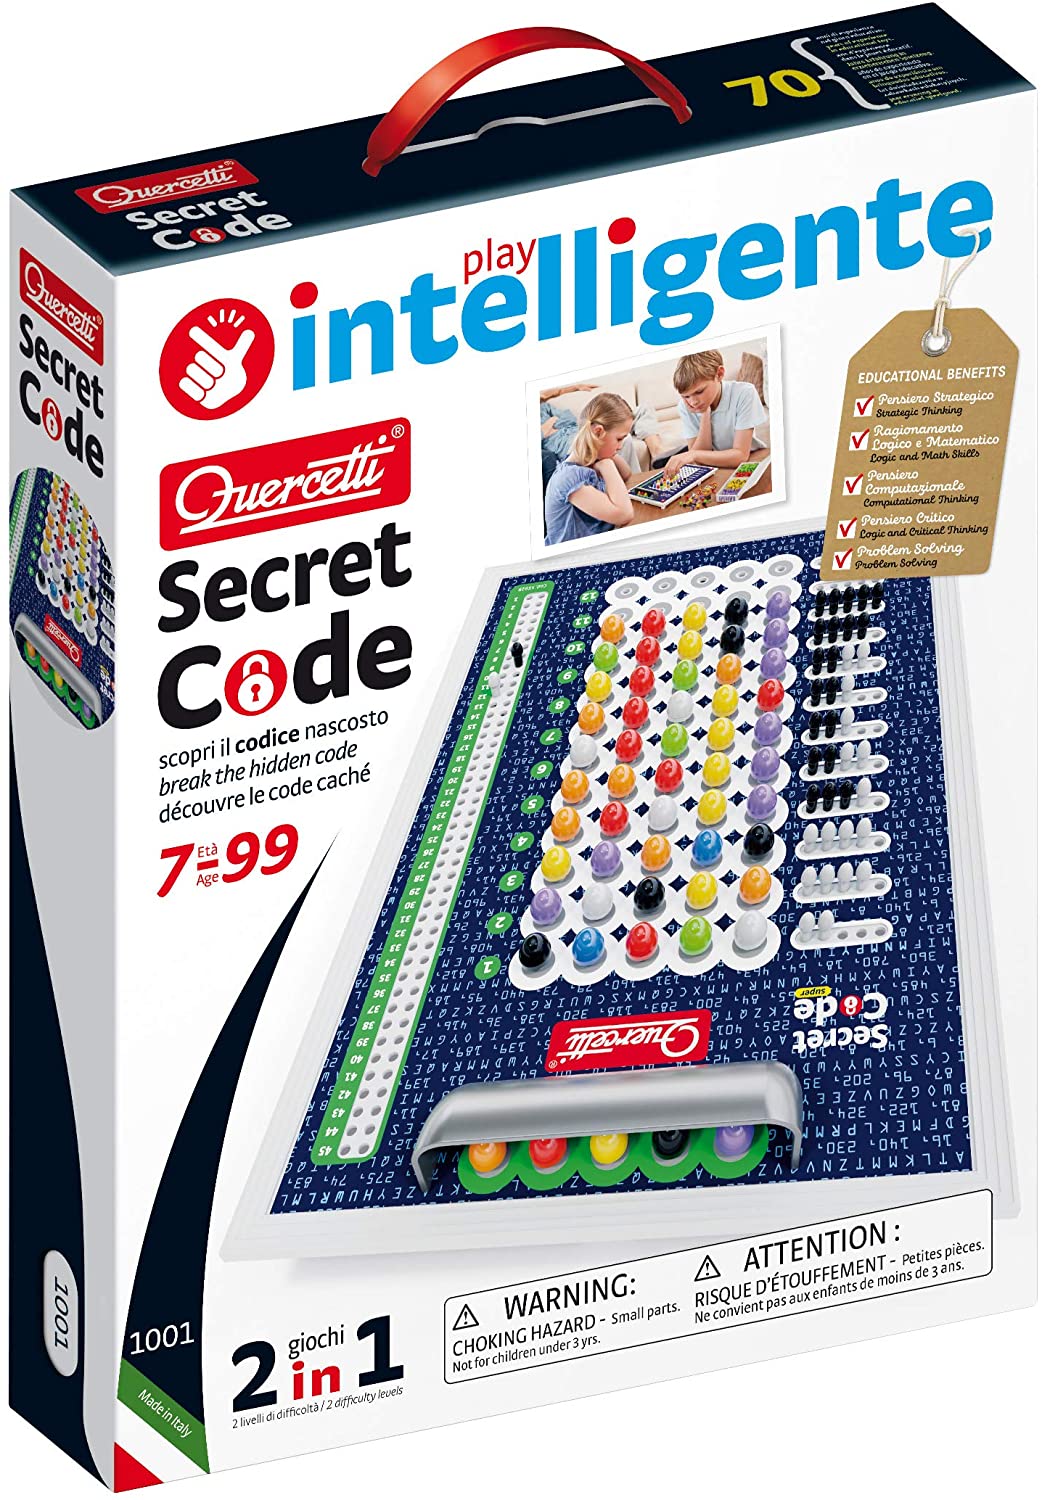 Quercetti 1001 Quercetti-1001 Secret Code, Board Game, Strategy Game